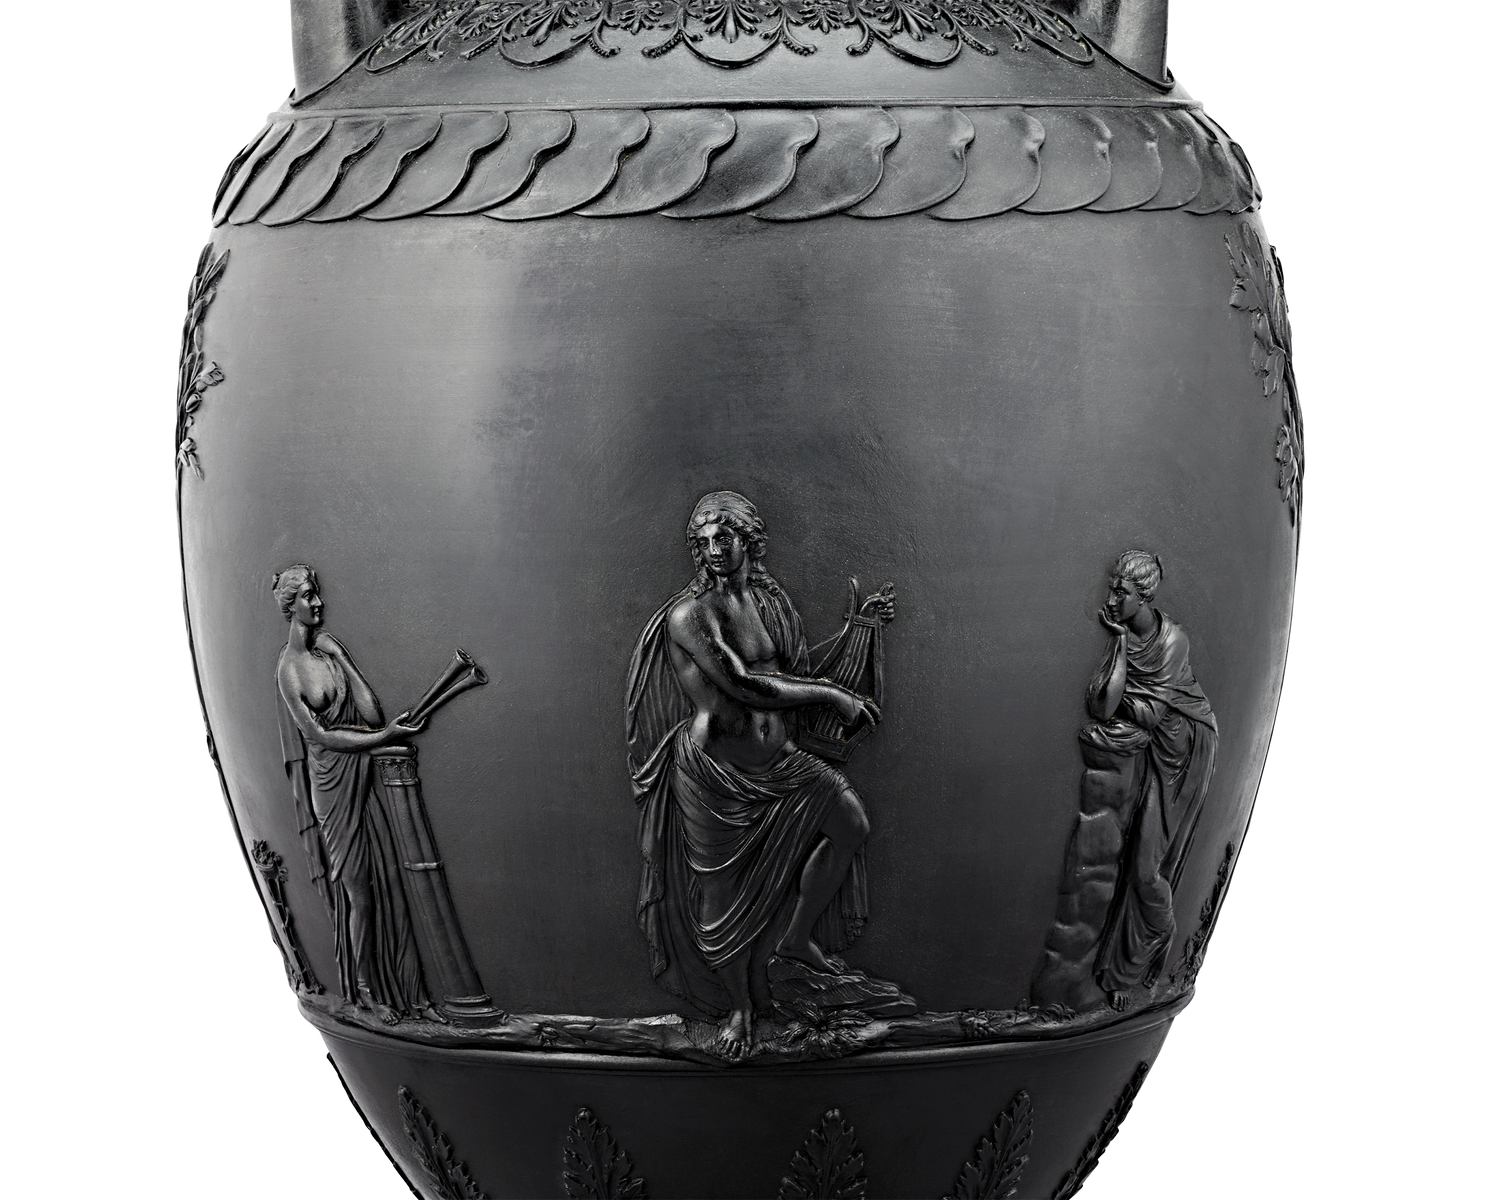 Wedgwood Black Basalt Two-Handled Vase